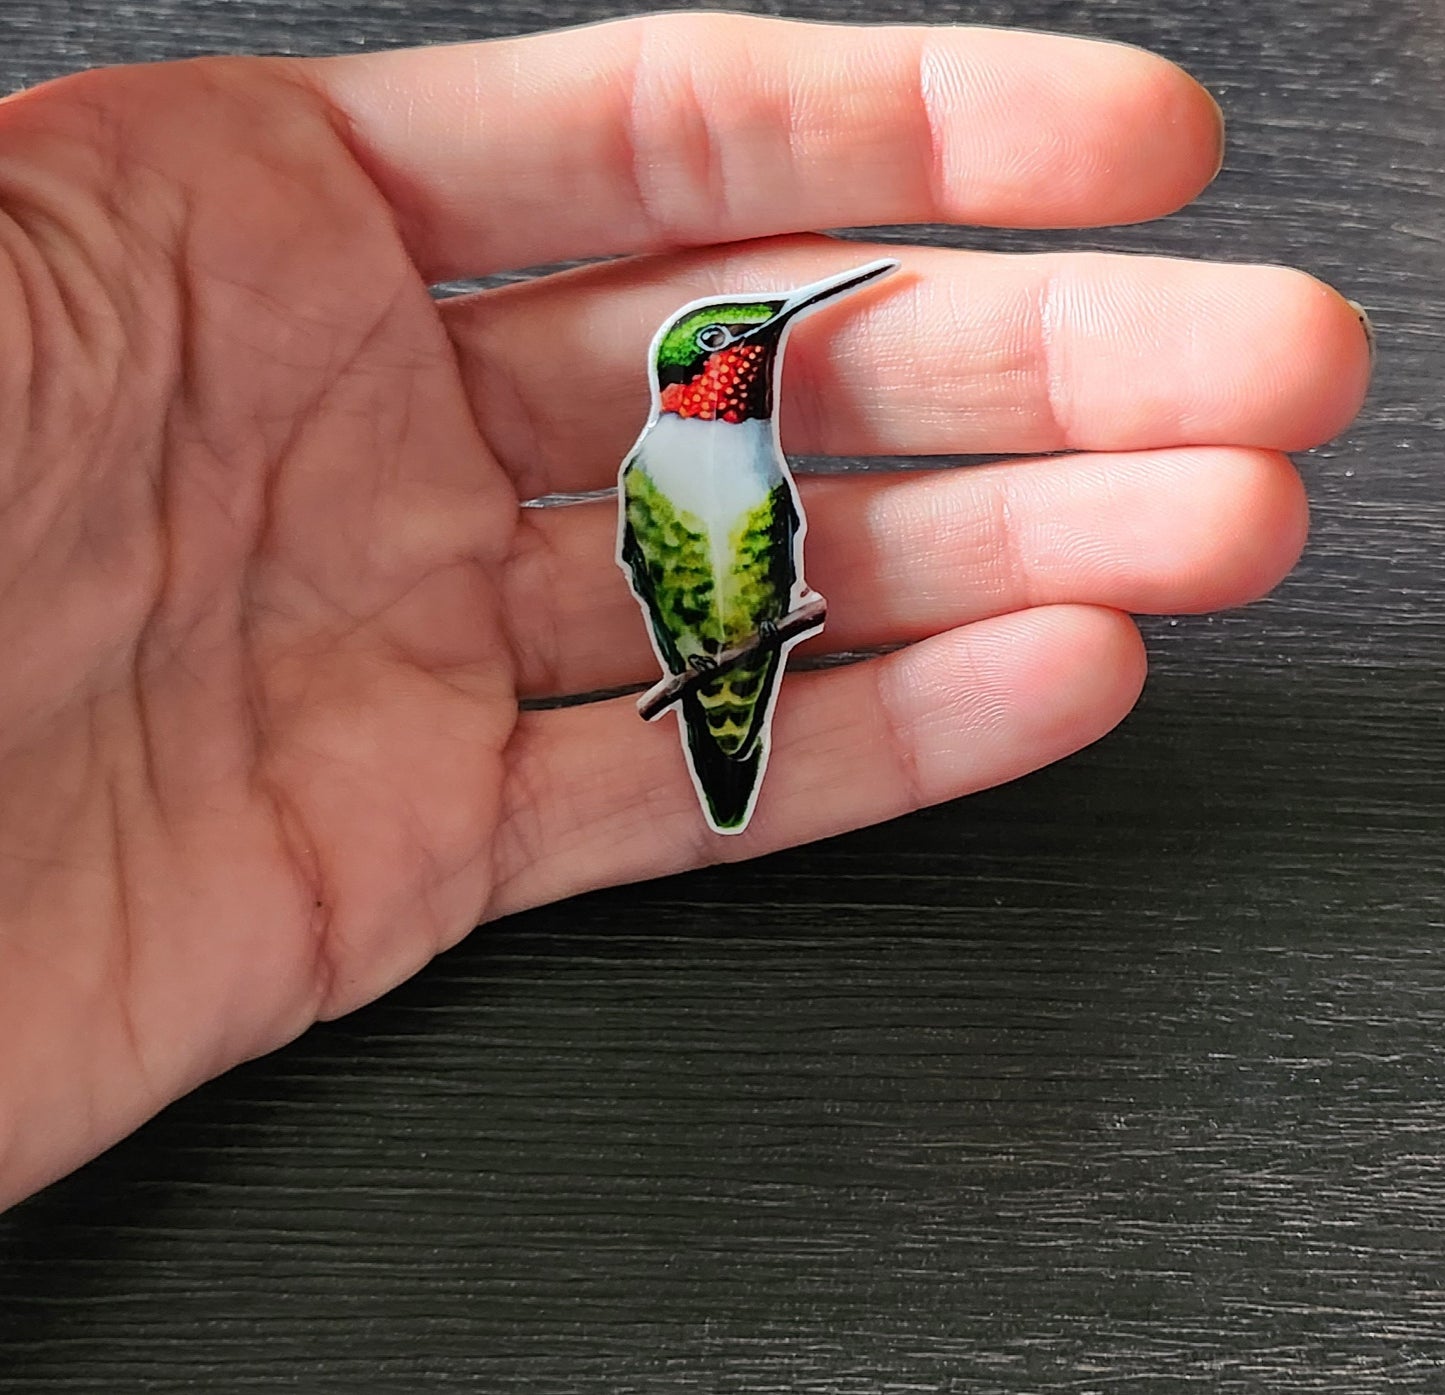 Ruby Throated Hummingbird - Resin Coated Polystyrene Pin - 100% Handmade Bird Pin